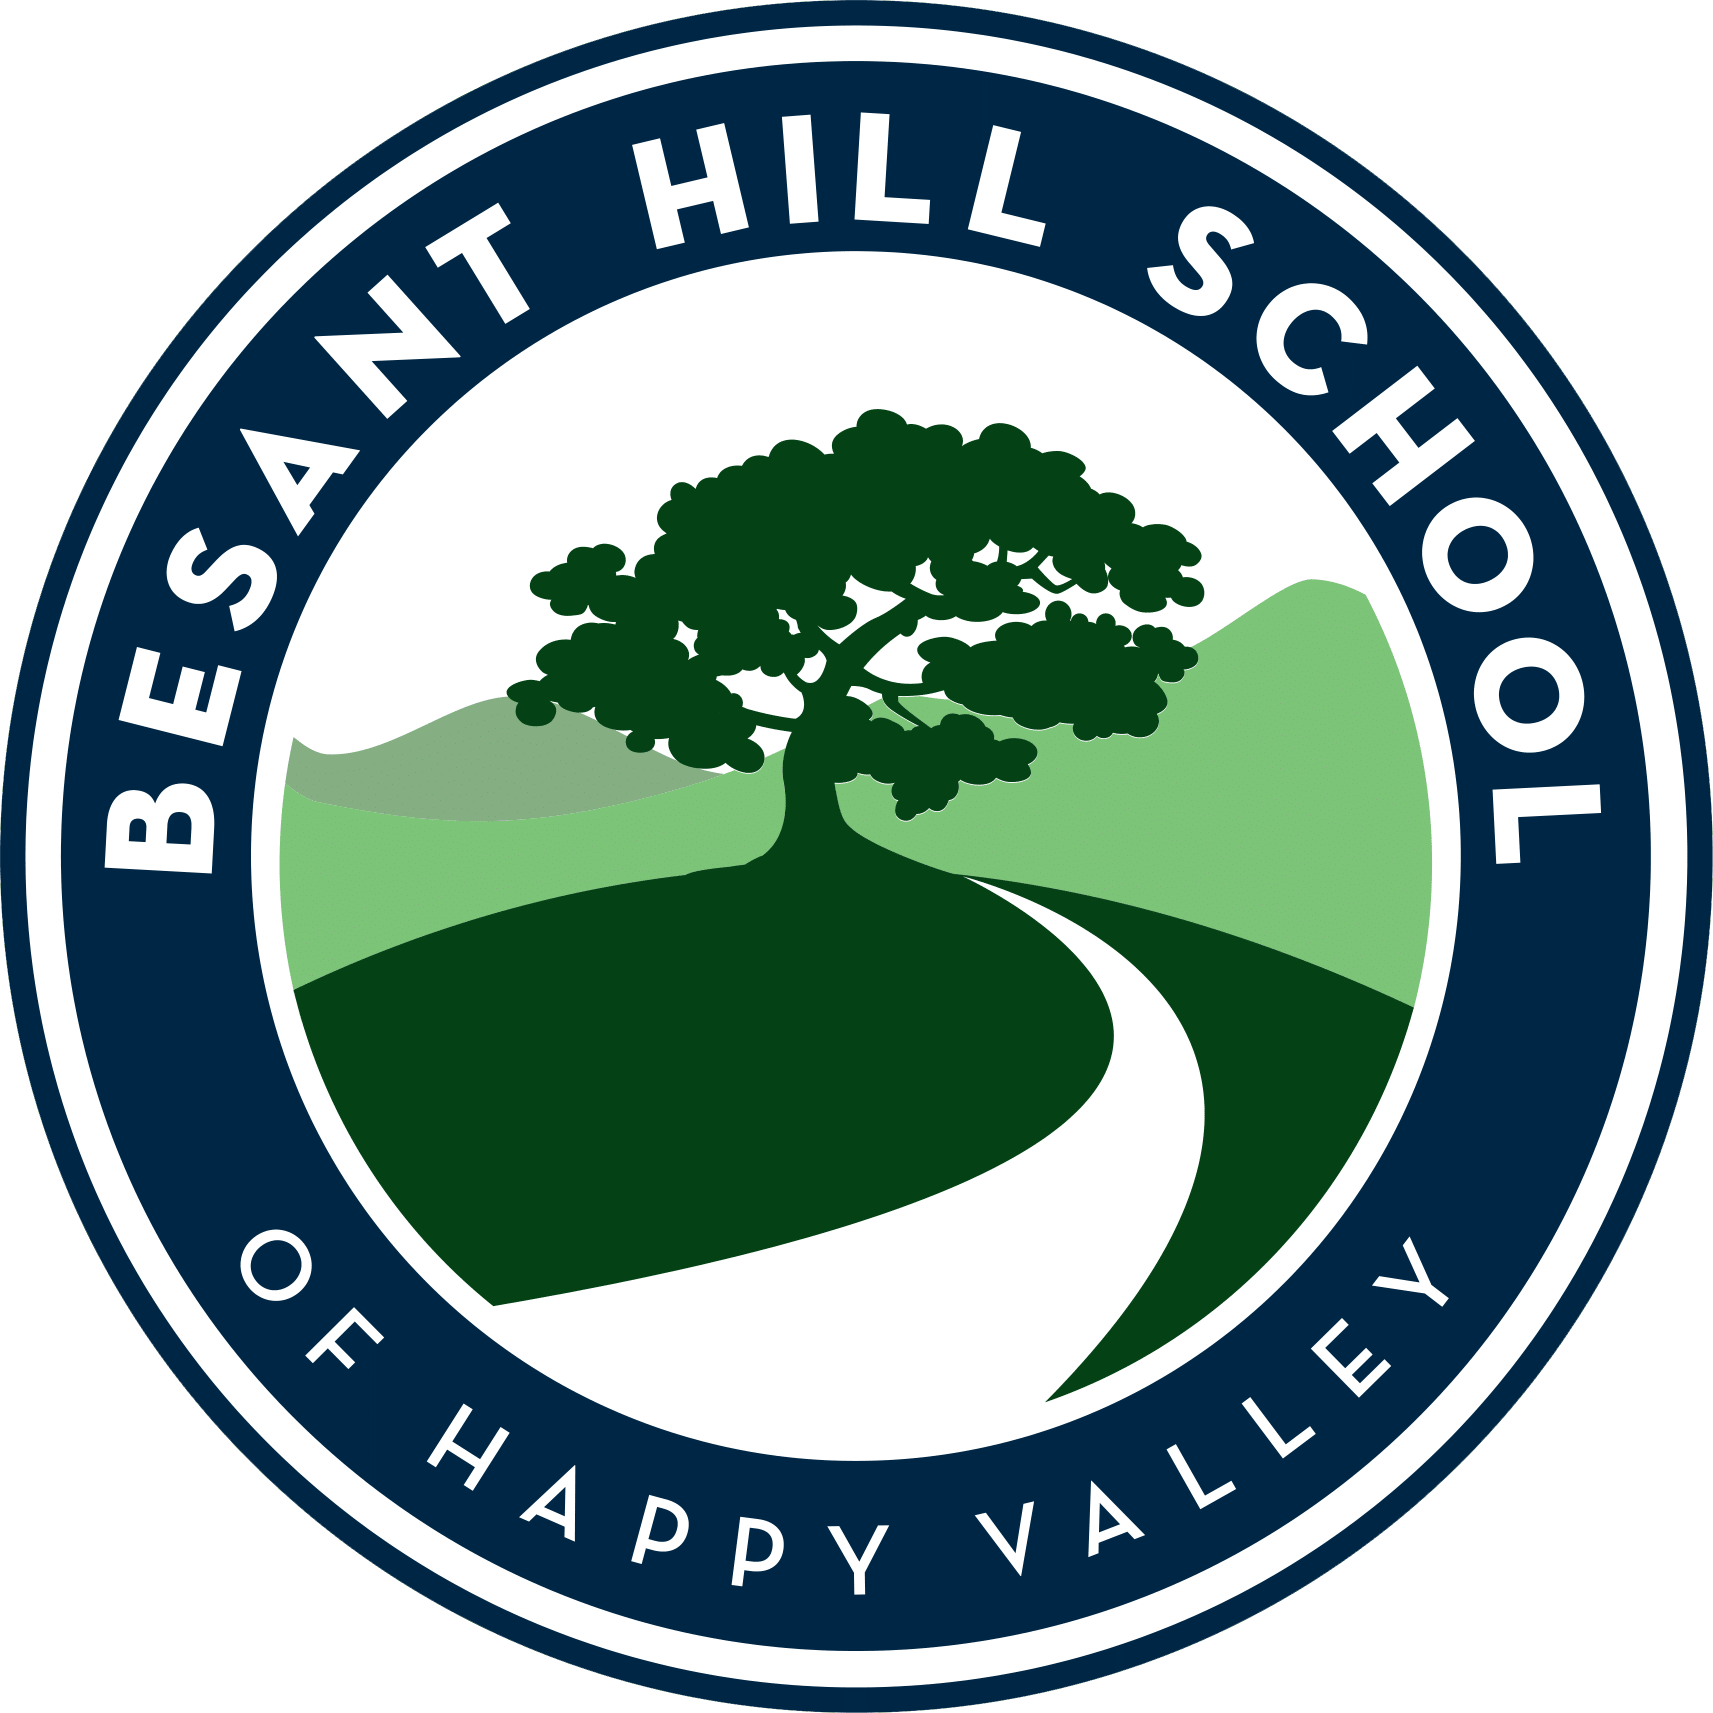 besant hill school logo